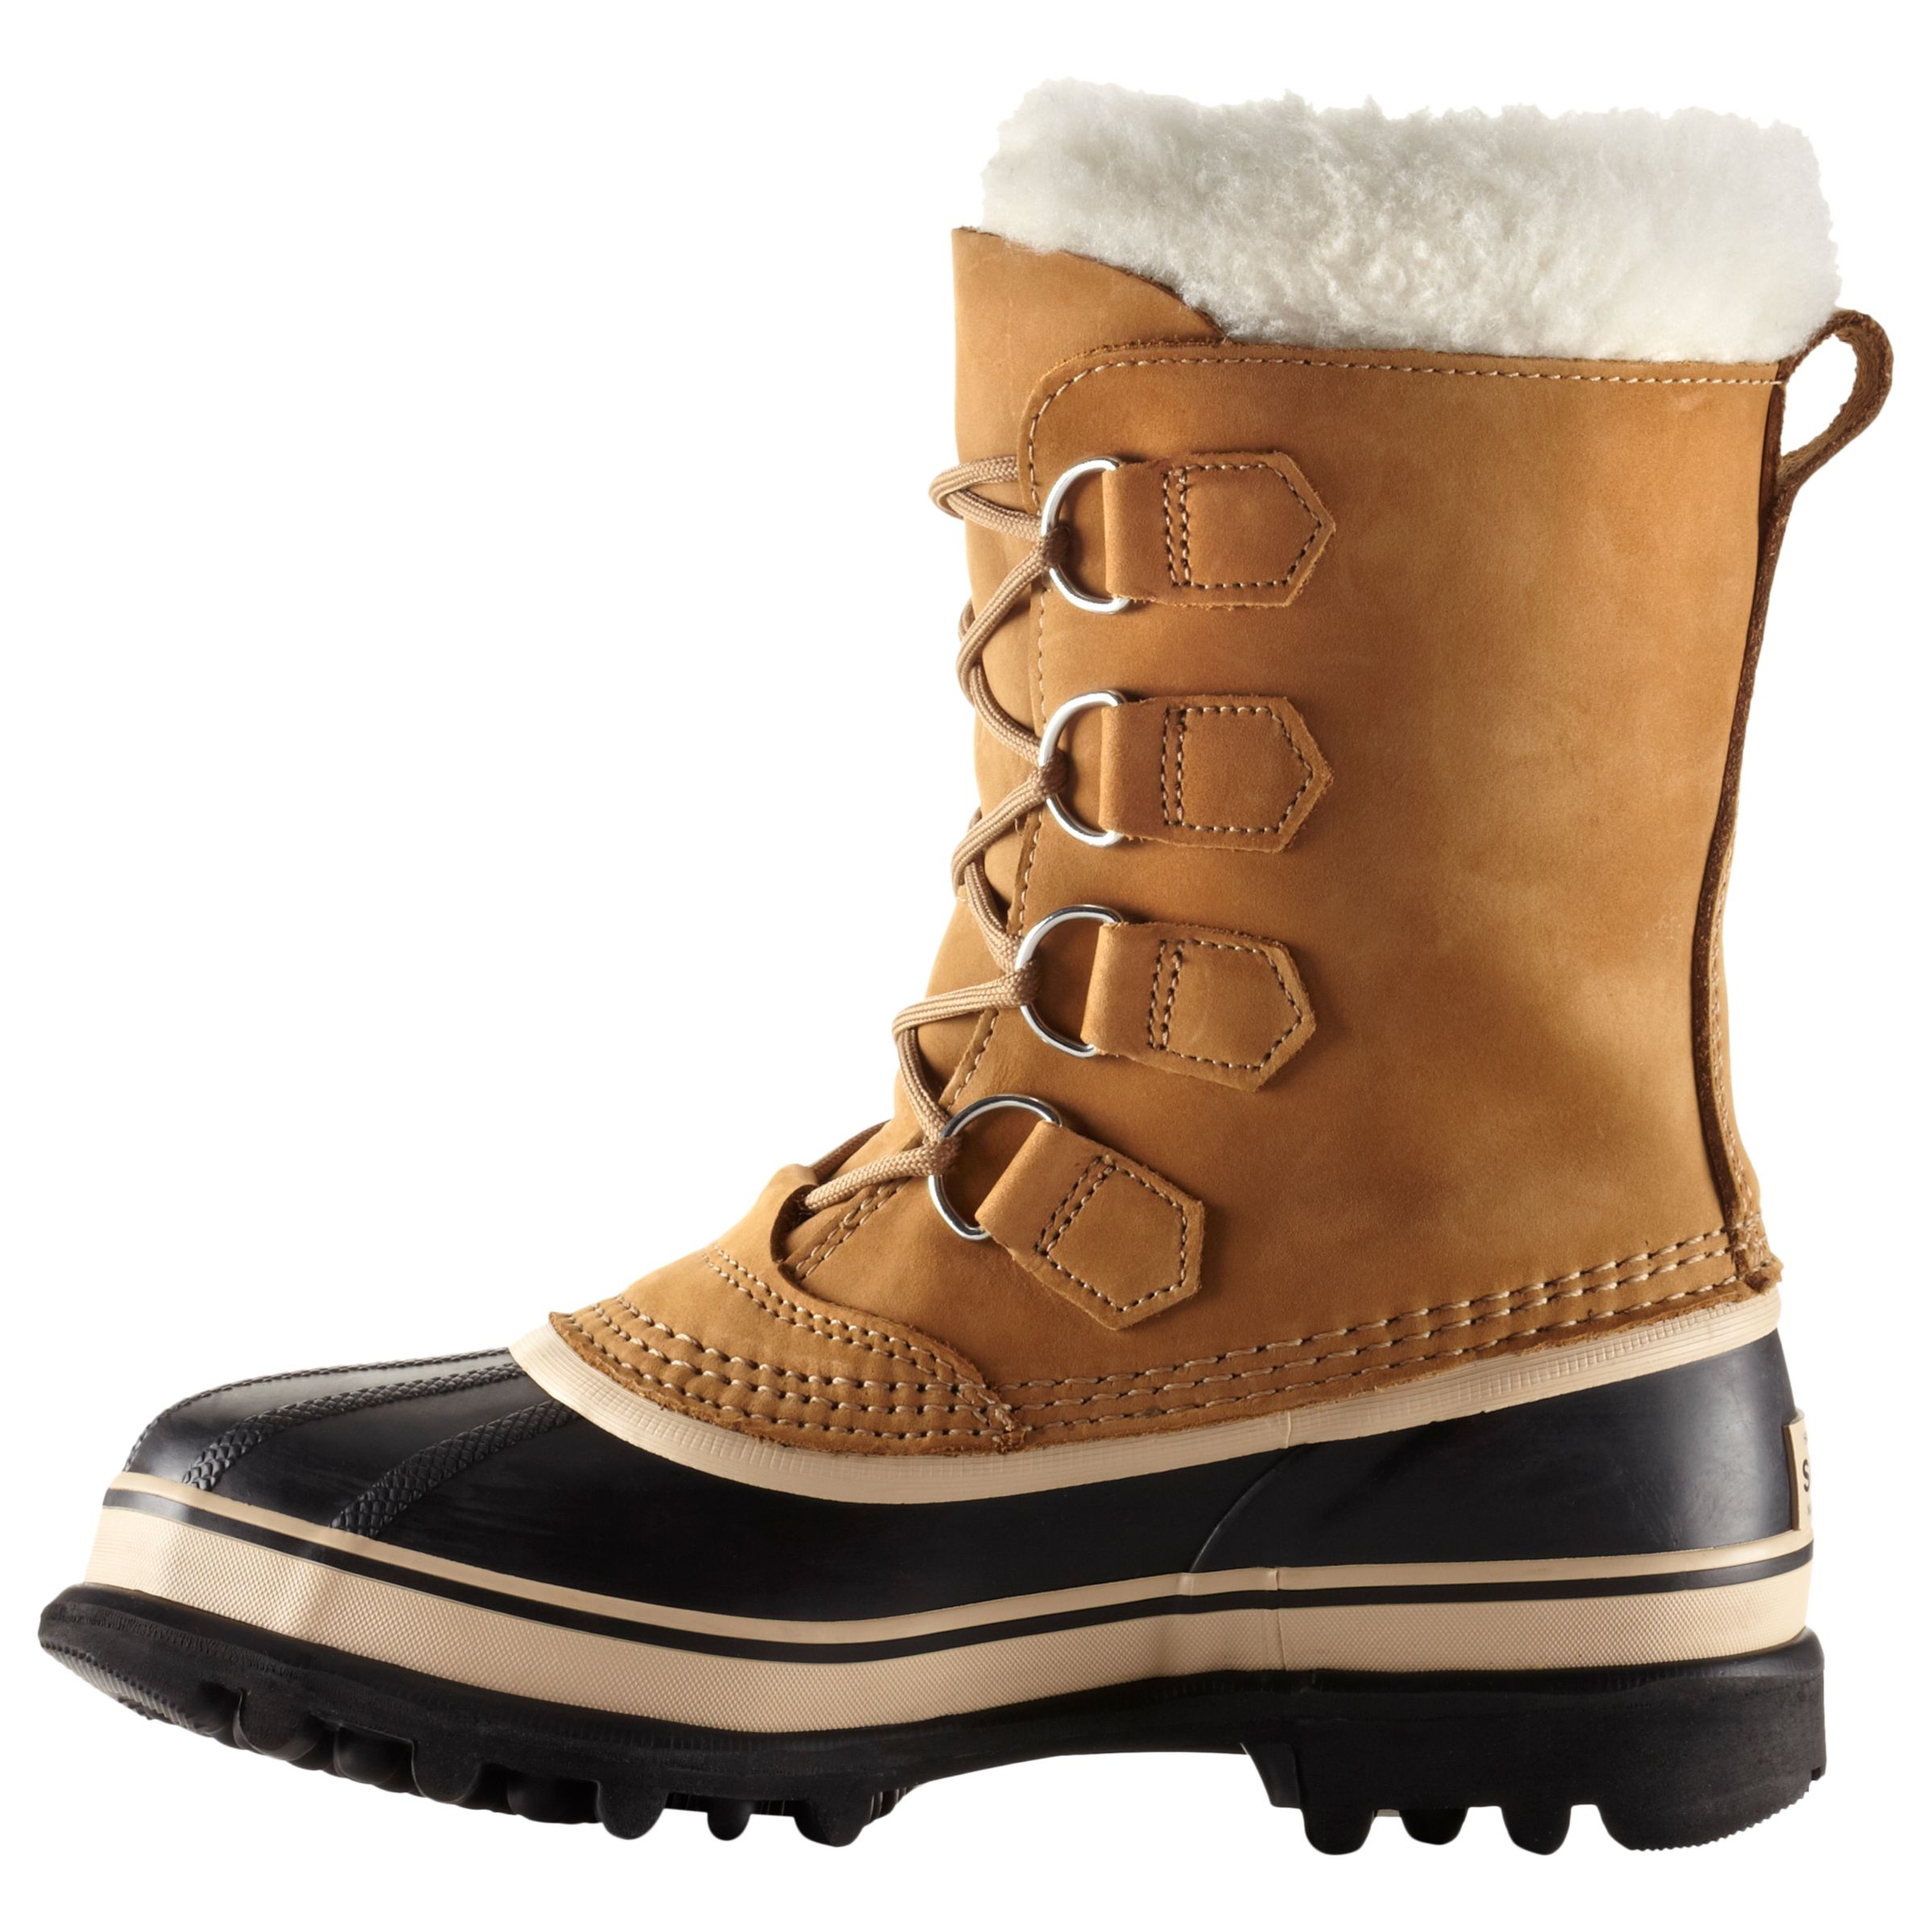 Sorel Caribou Women's Winter Snow Boots, Brown at John Lewis & Partners